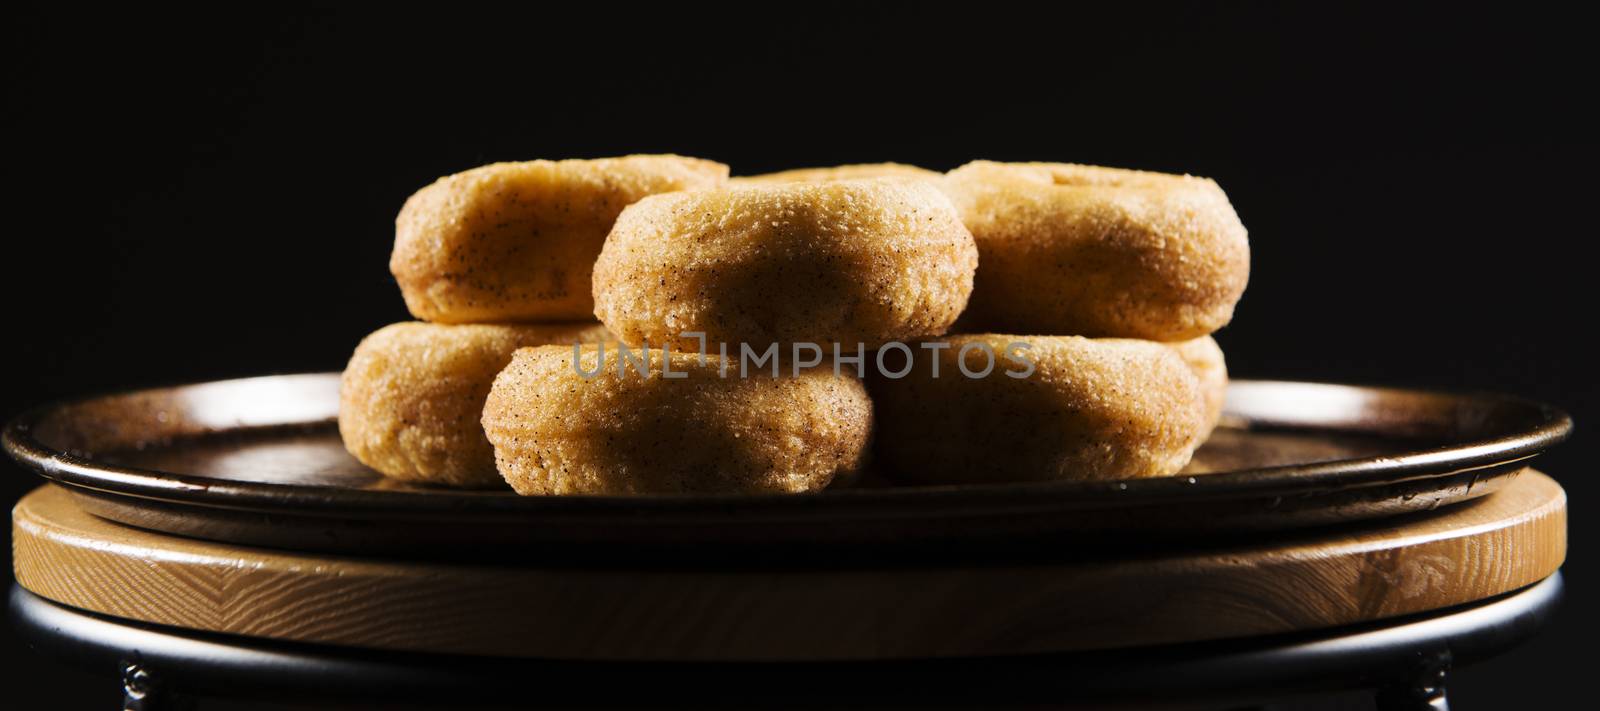 Fresh baked cinnamon donuts by artistrobd